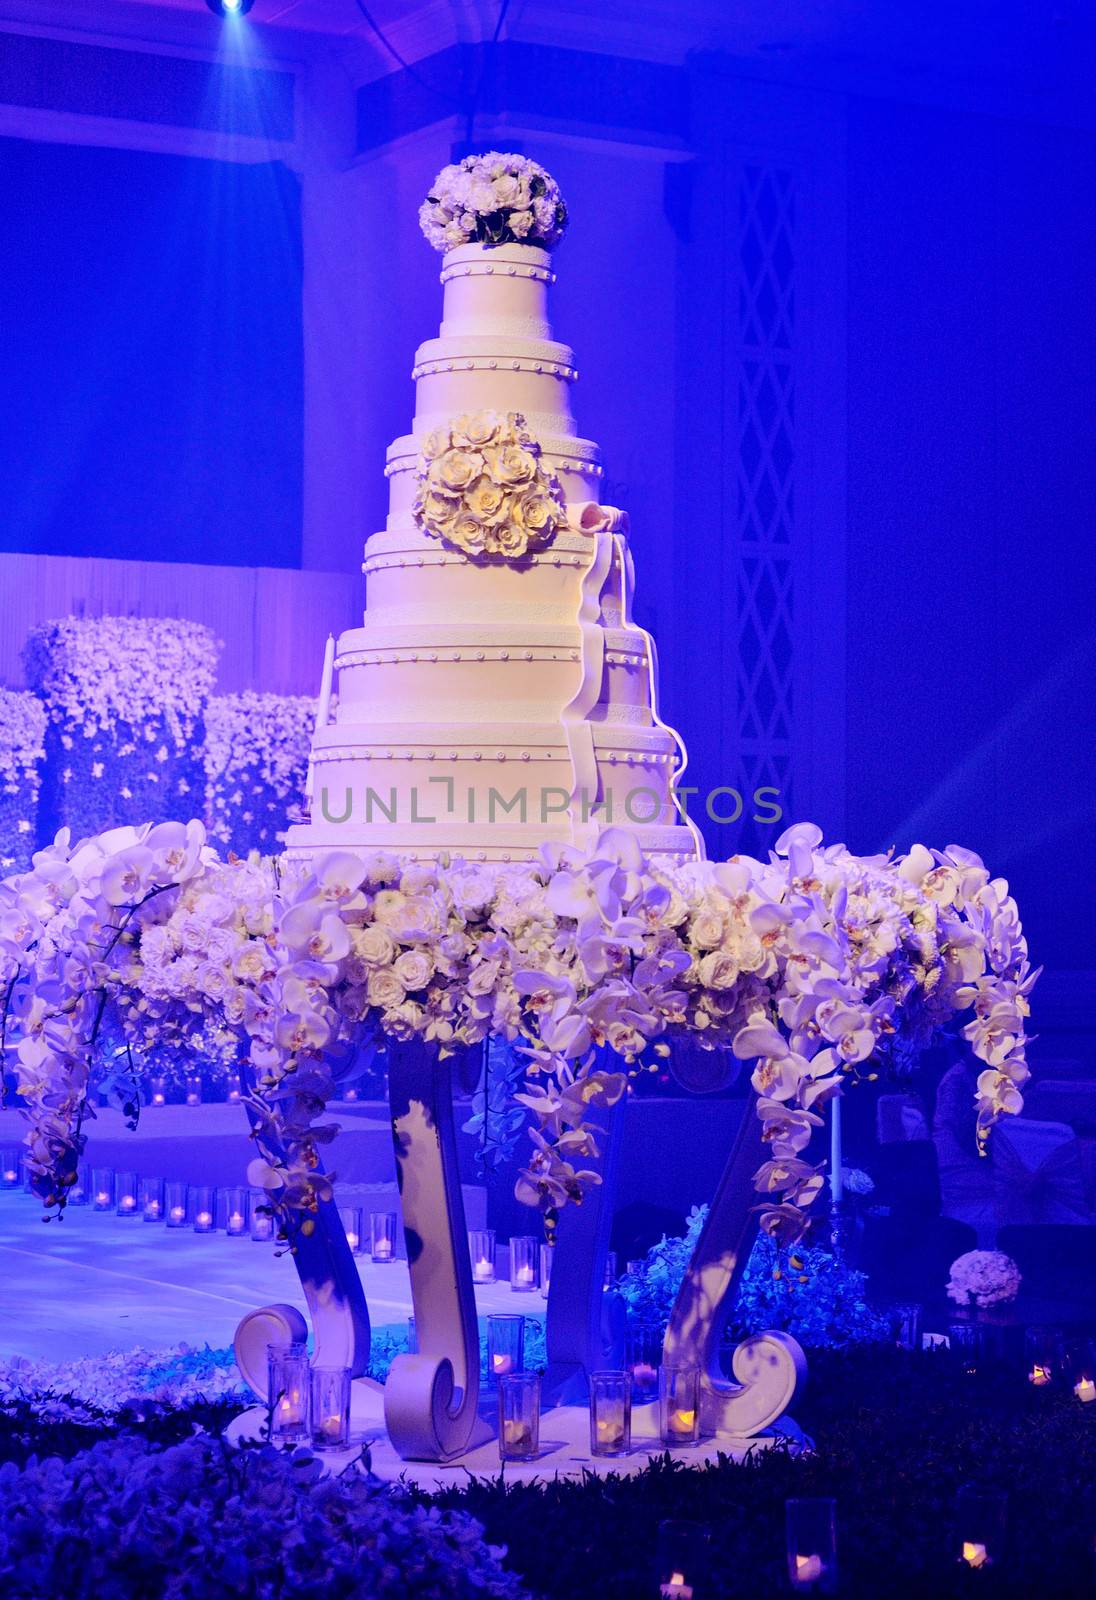 Wedding cake with flower decorate in wedding ceremony